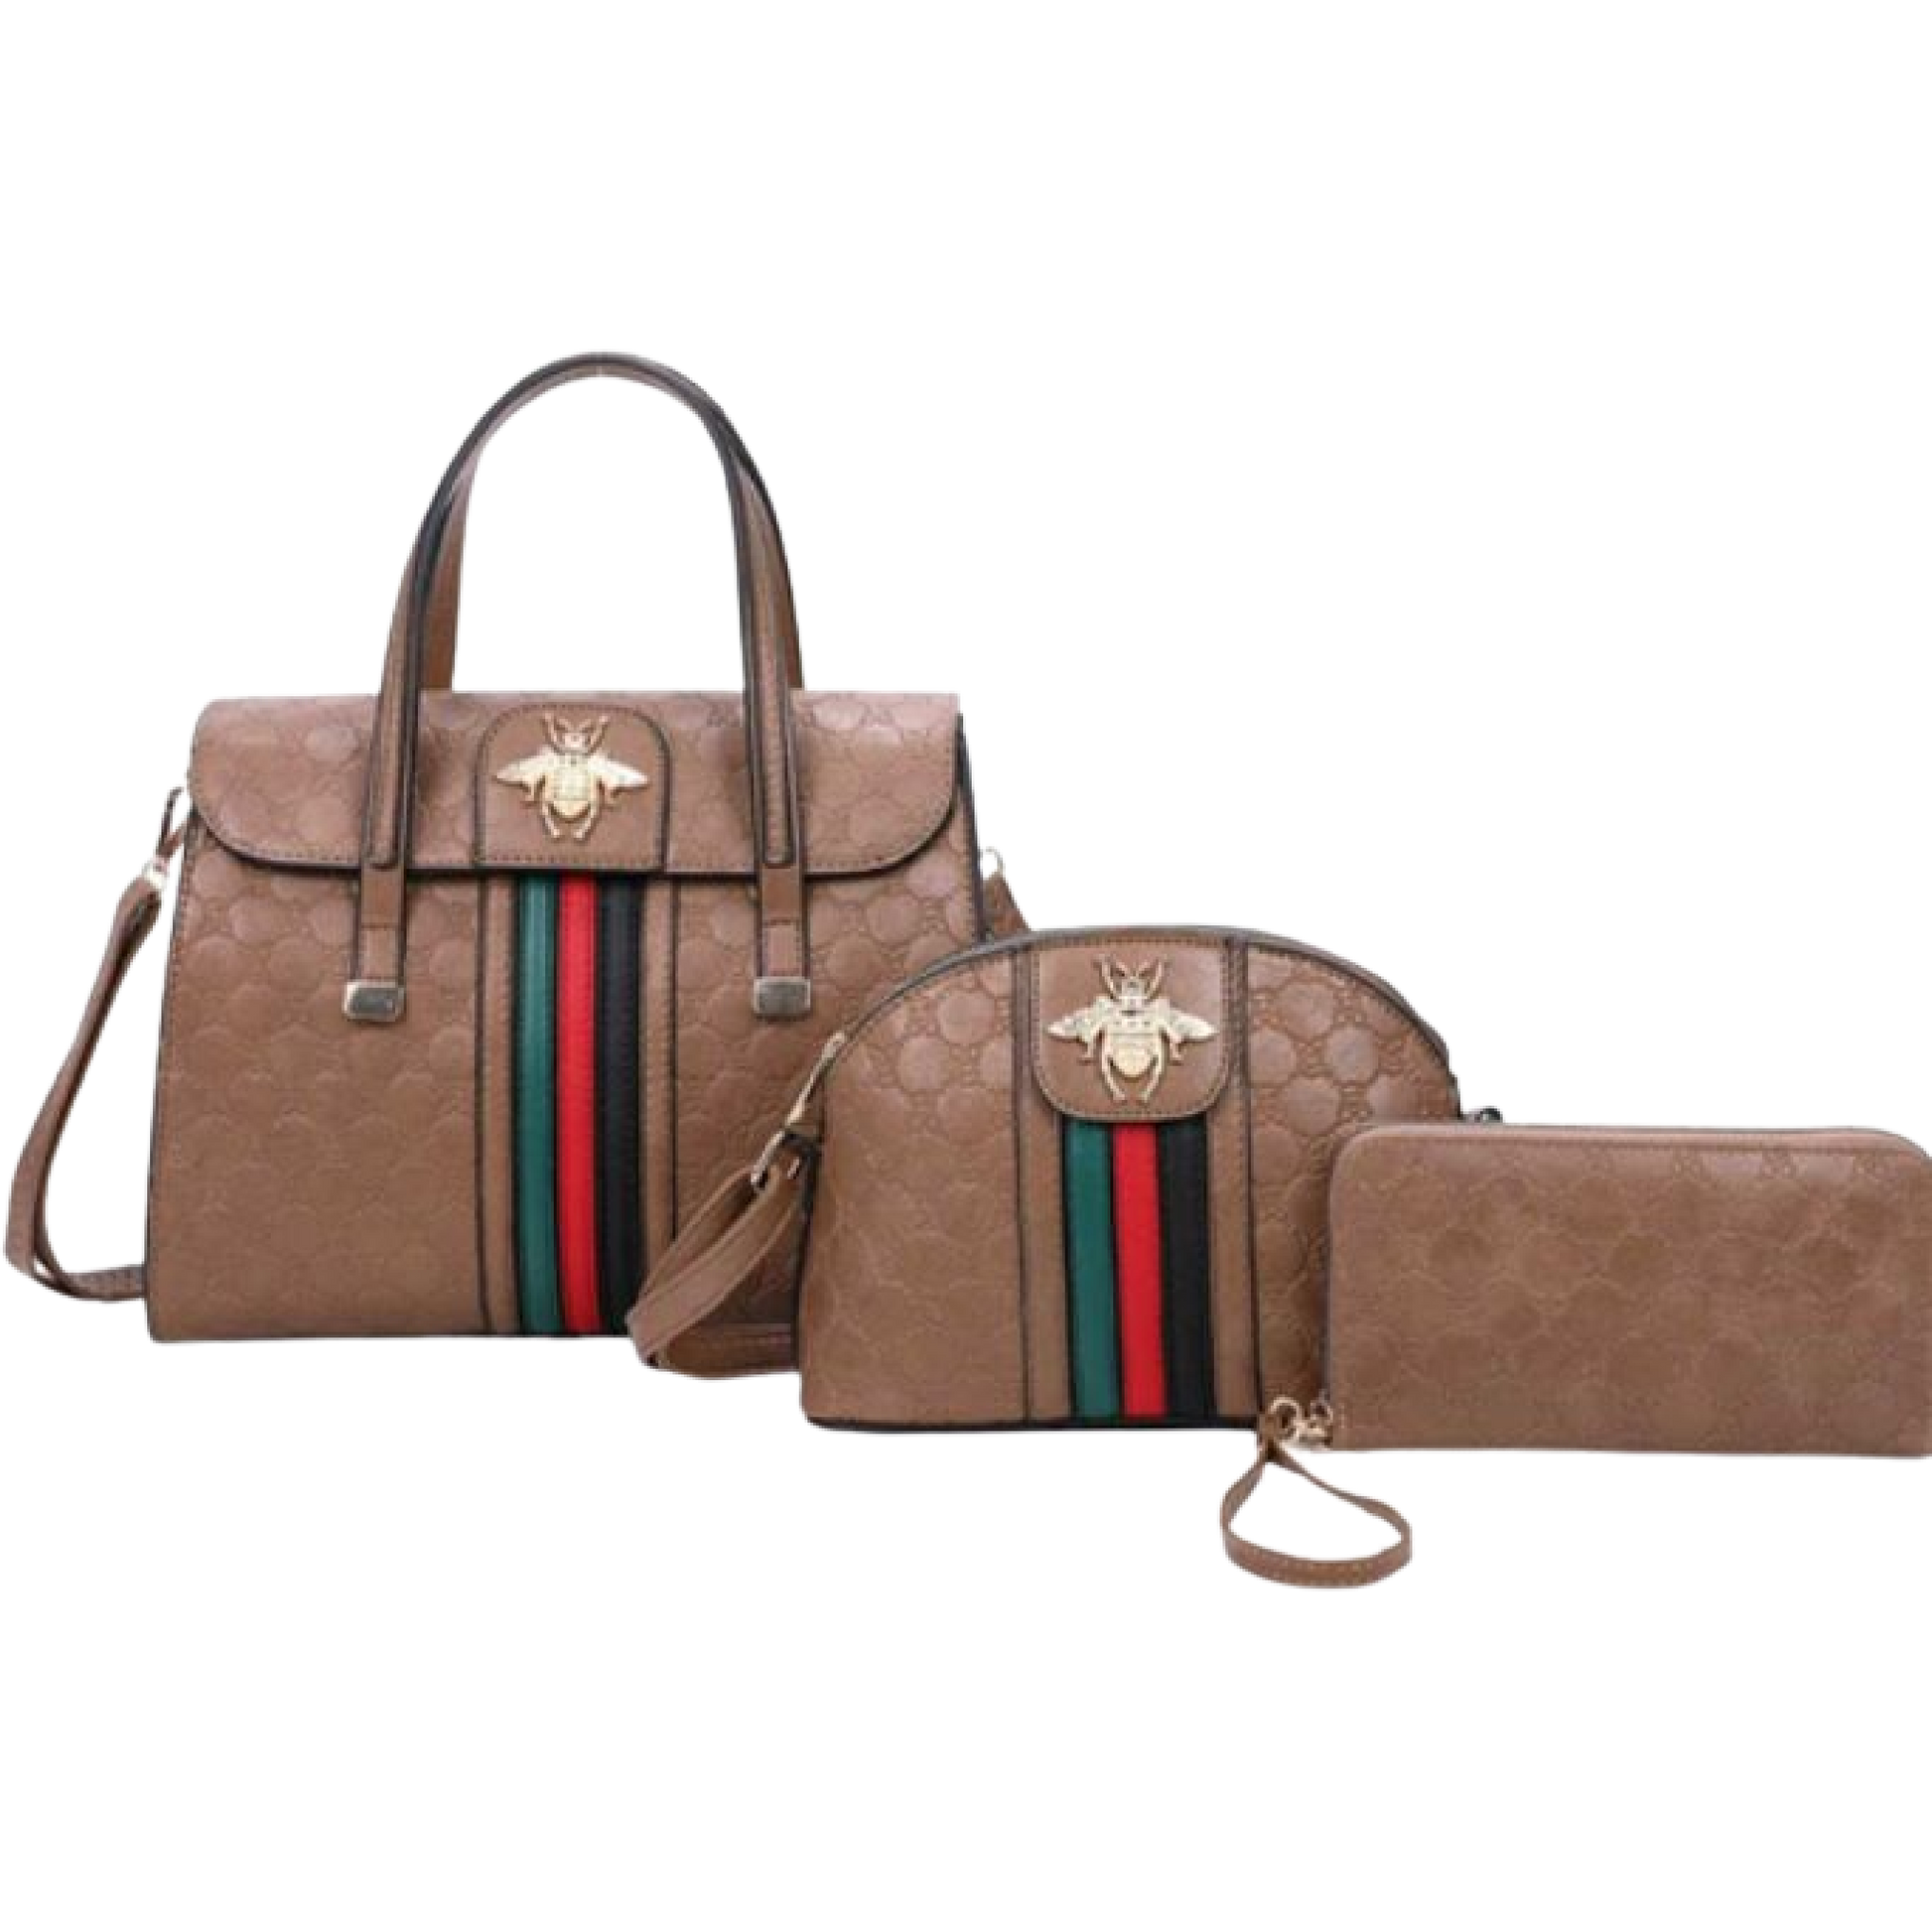 Handbags fashion bag set female purse accessory Vector Image